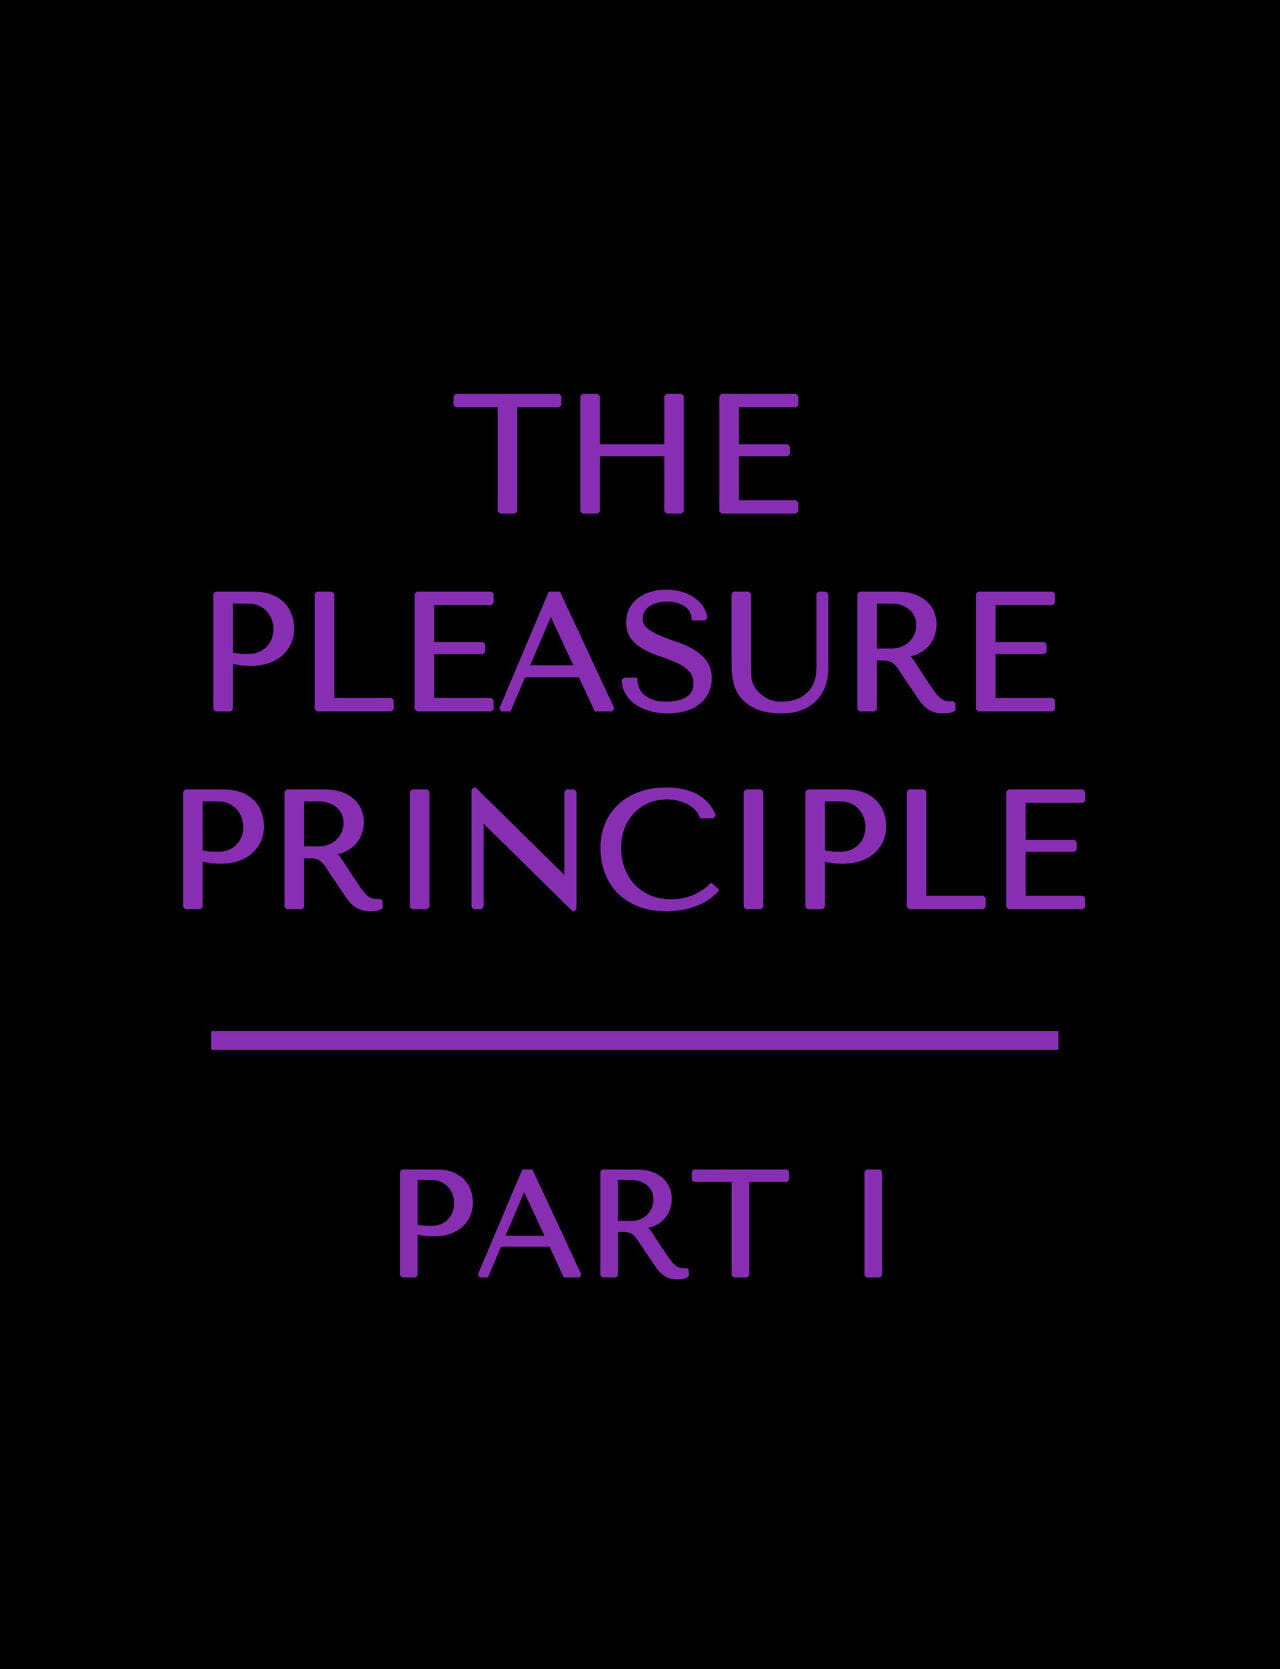 De Plezier beginsel